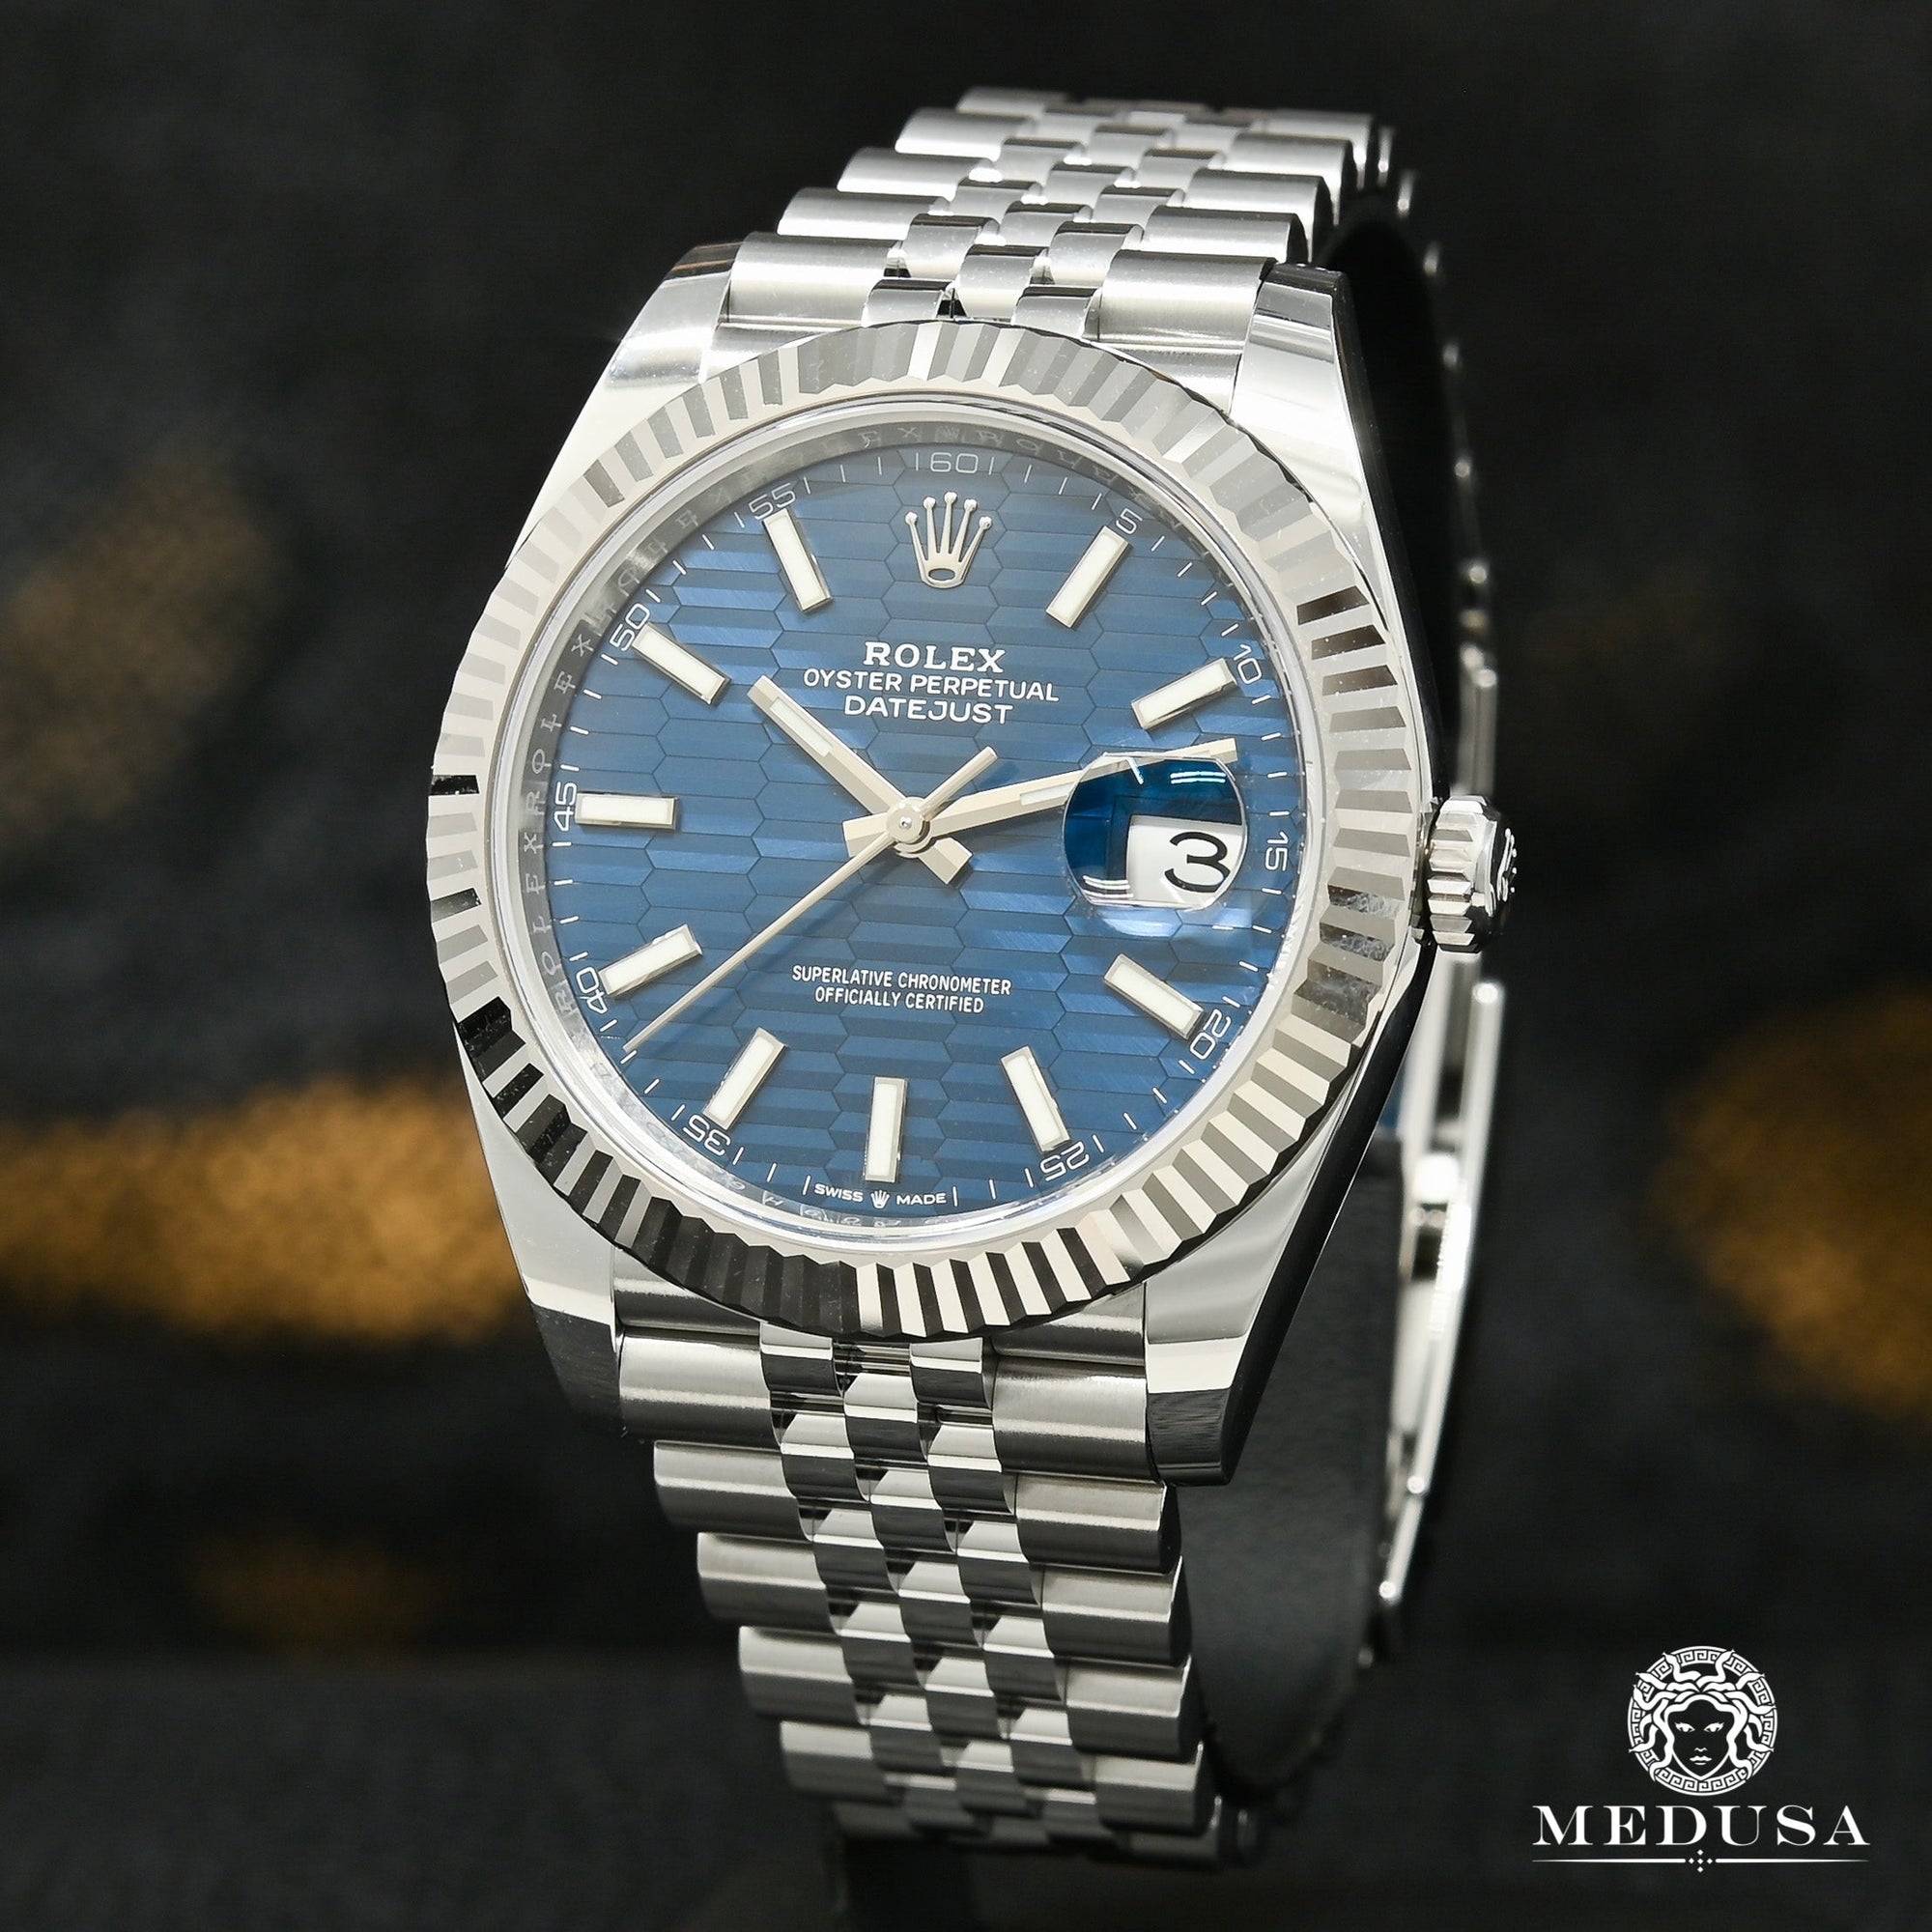 Rolex watch | Rolex Datejust Men's Watch 41mm - Jubilee Fluted Pattern Blue Dial White Gold